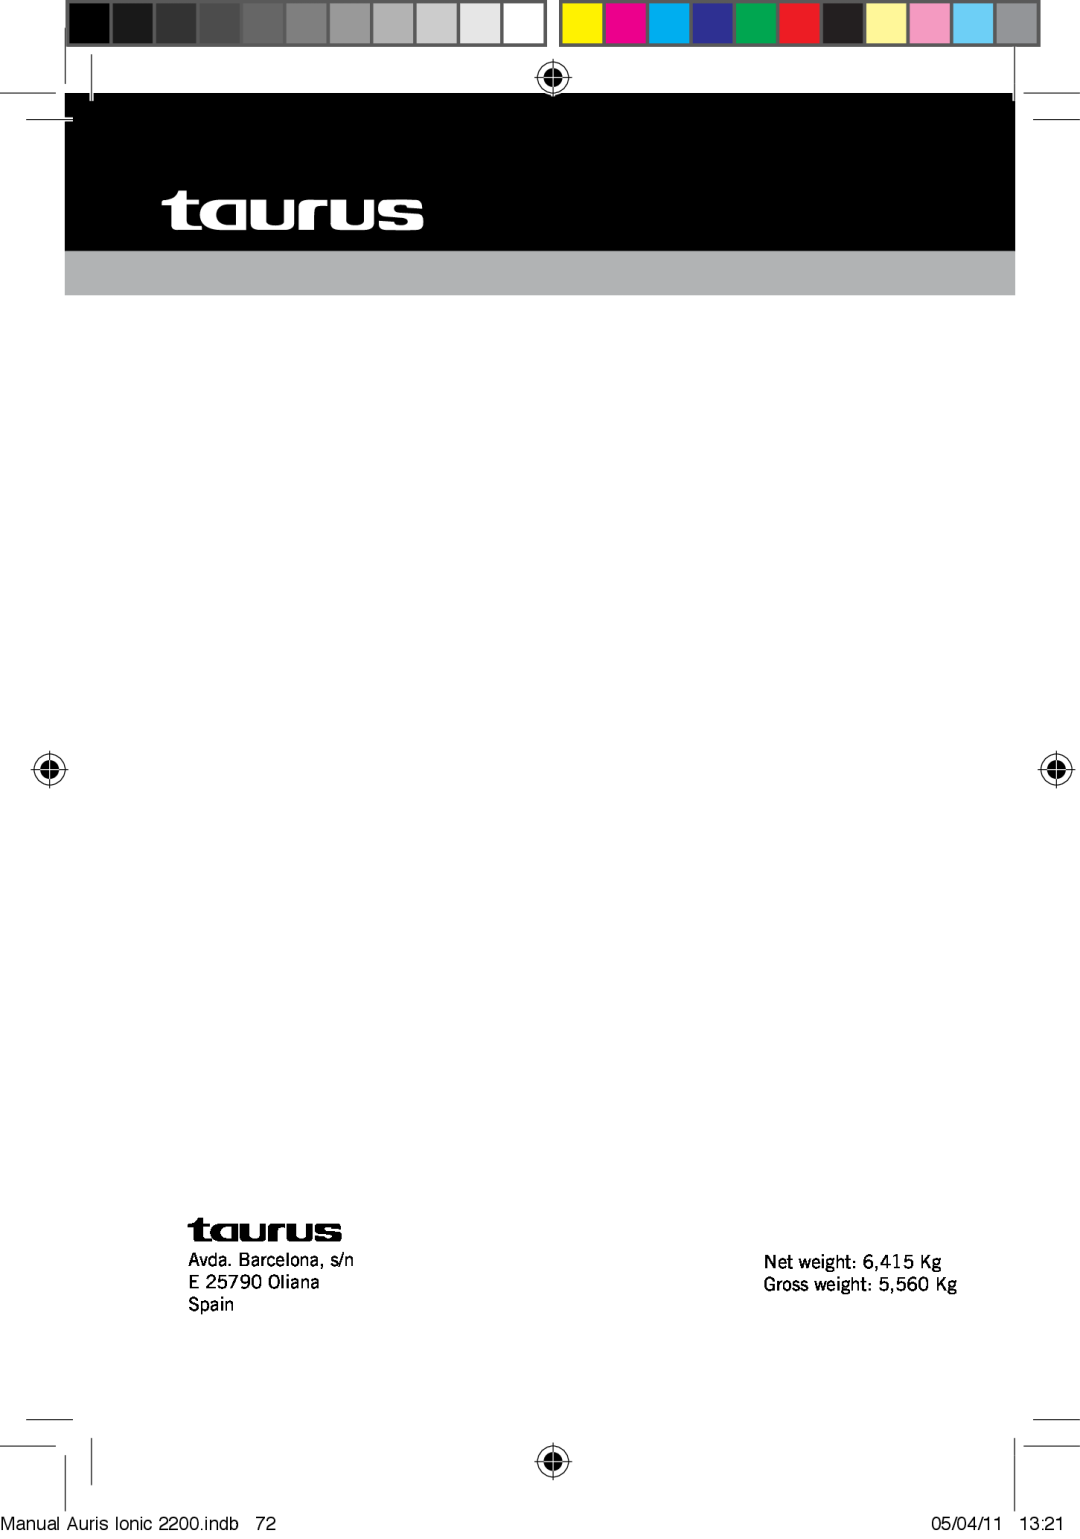 Taurus Group ionic 2200 Avda. Barcelona, s/n, Net weight 6,415 Kg, E 25790 Oliana, Gross weight 5,560 Kg, Spain, Manual 